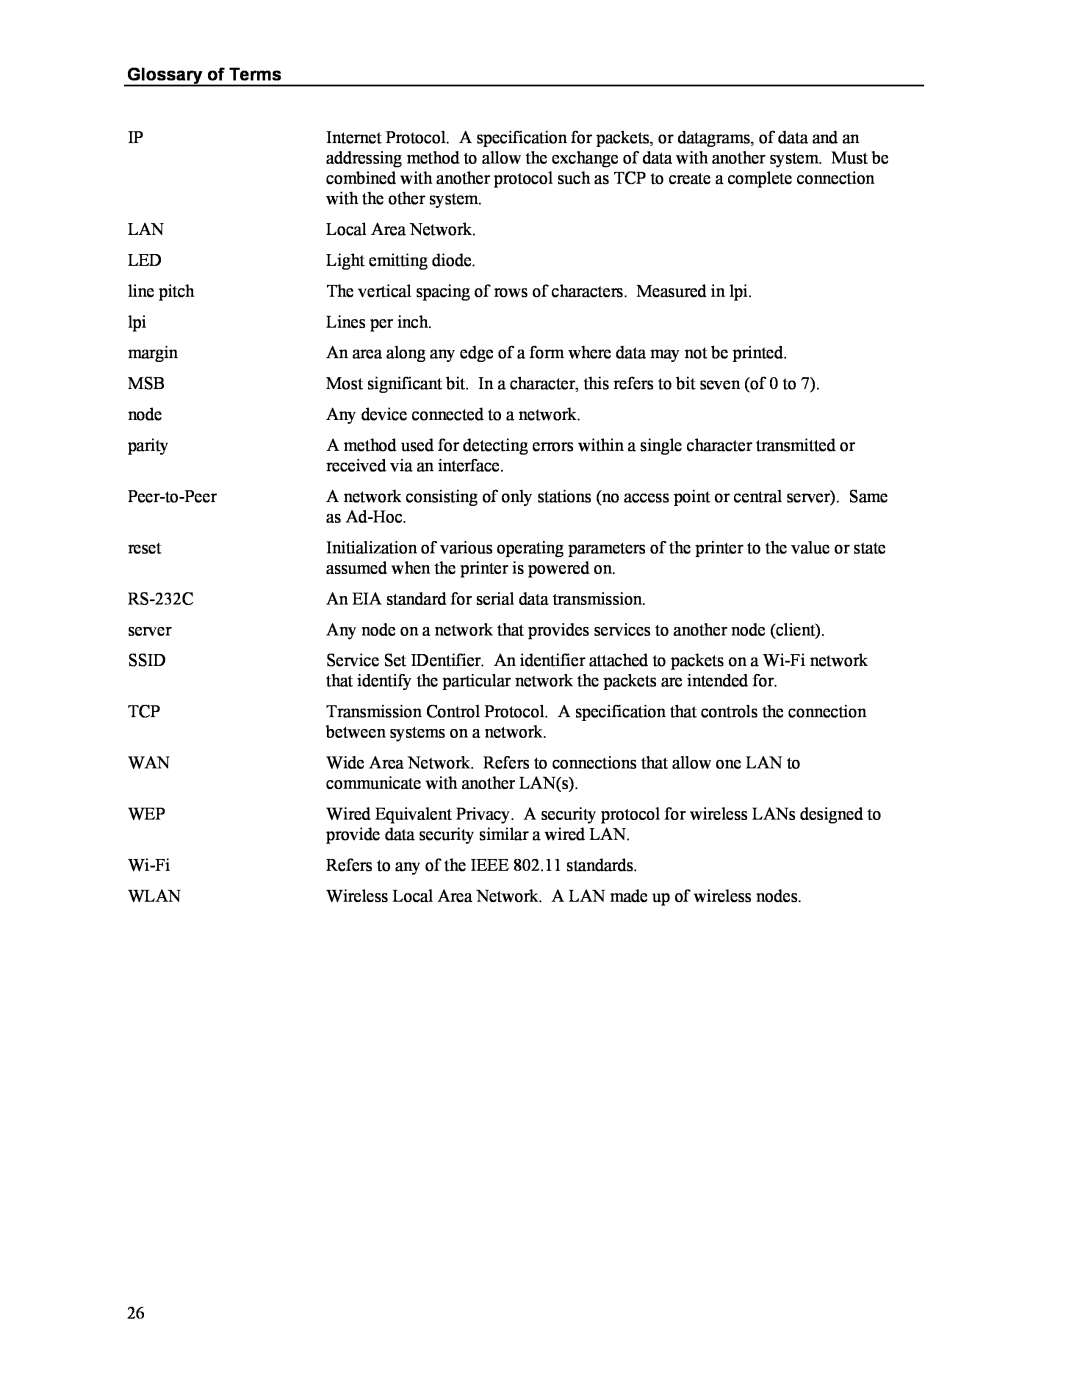 Printek Mt3-II manual Glossary of Terms 